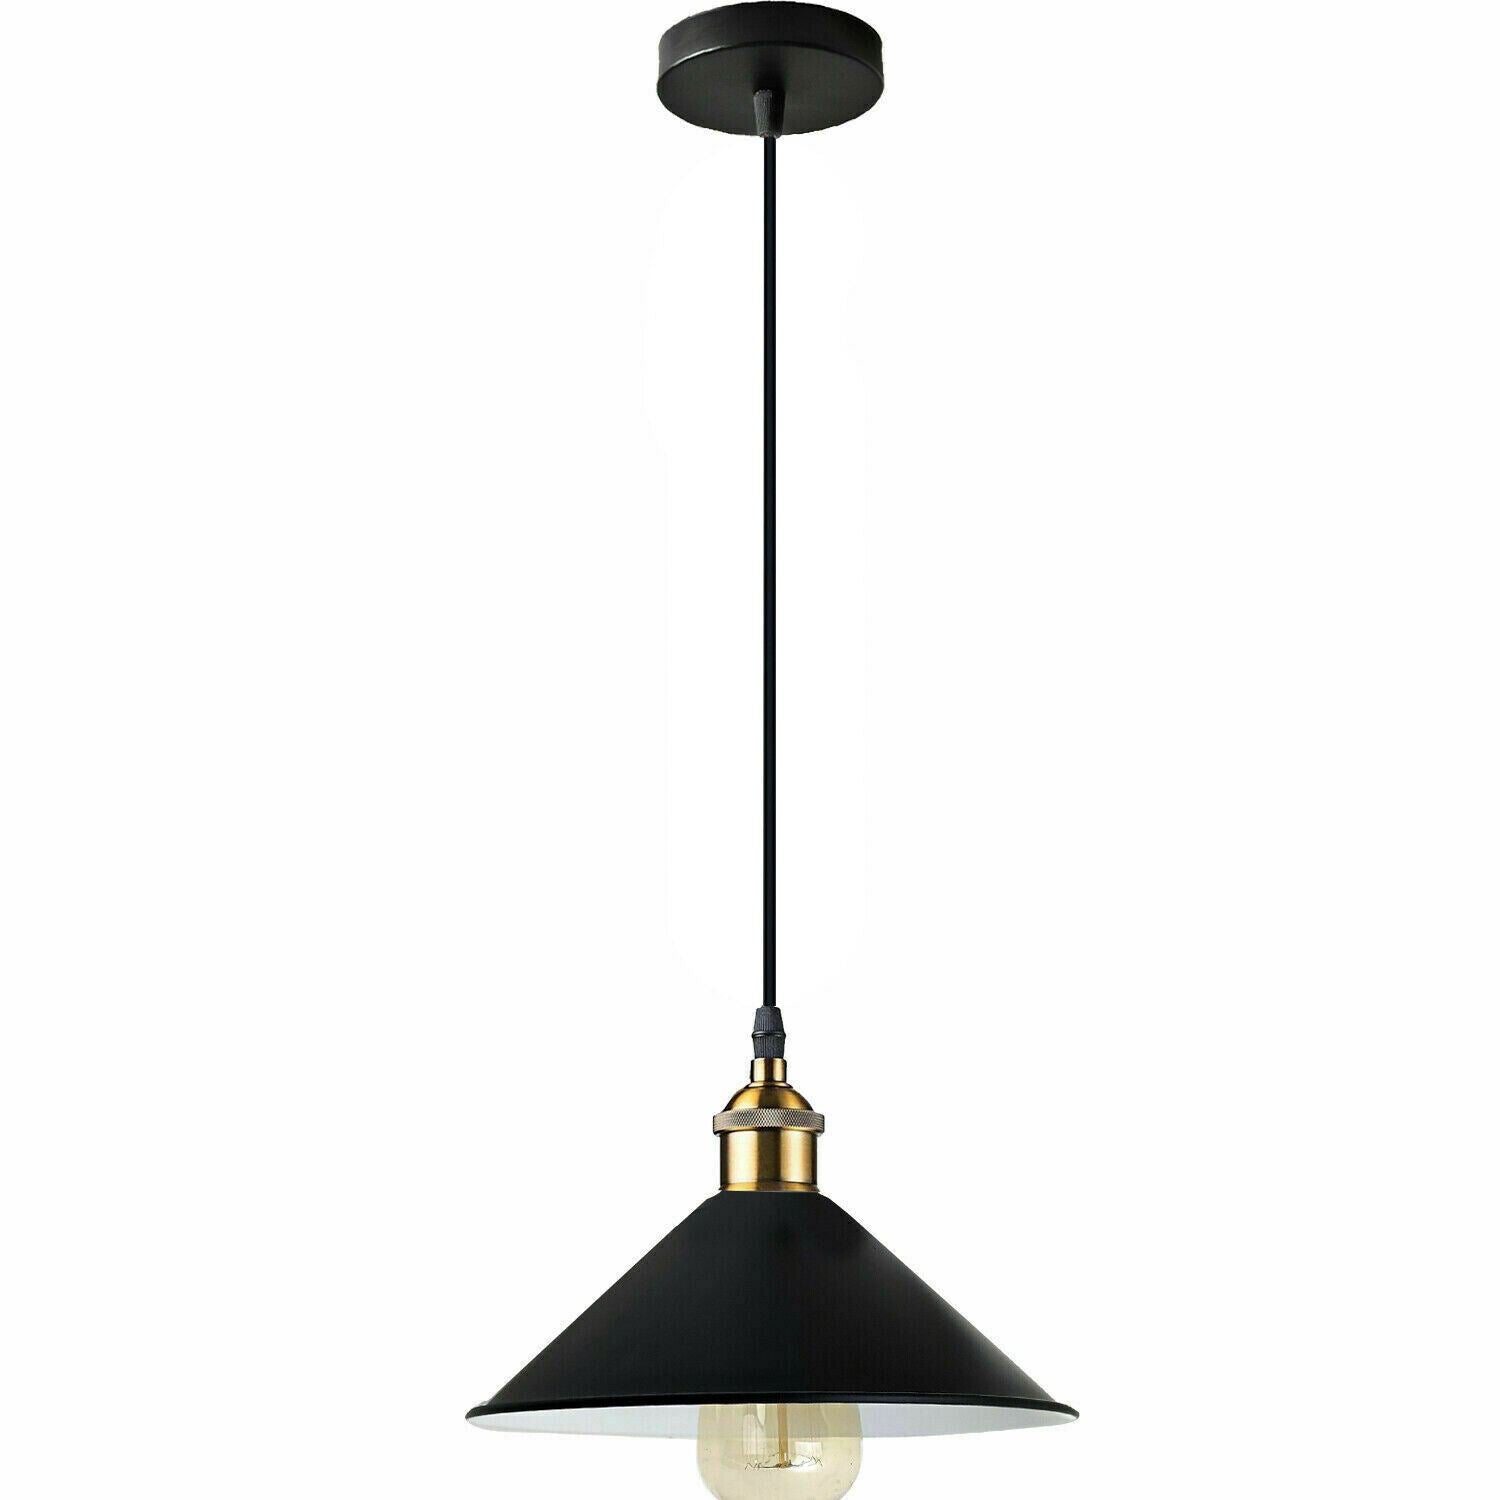 Retro Industrial Black Ceiling Pendant Light Metal Lamp Shade With 95cm Adjustable Cable~1354 - LEDSone UK Ltd